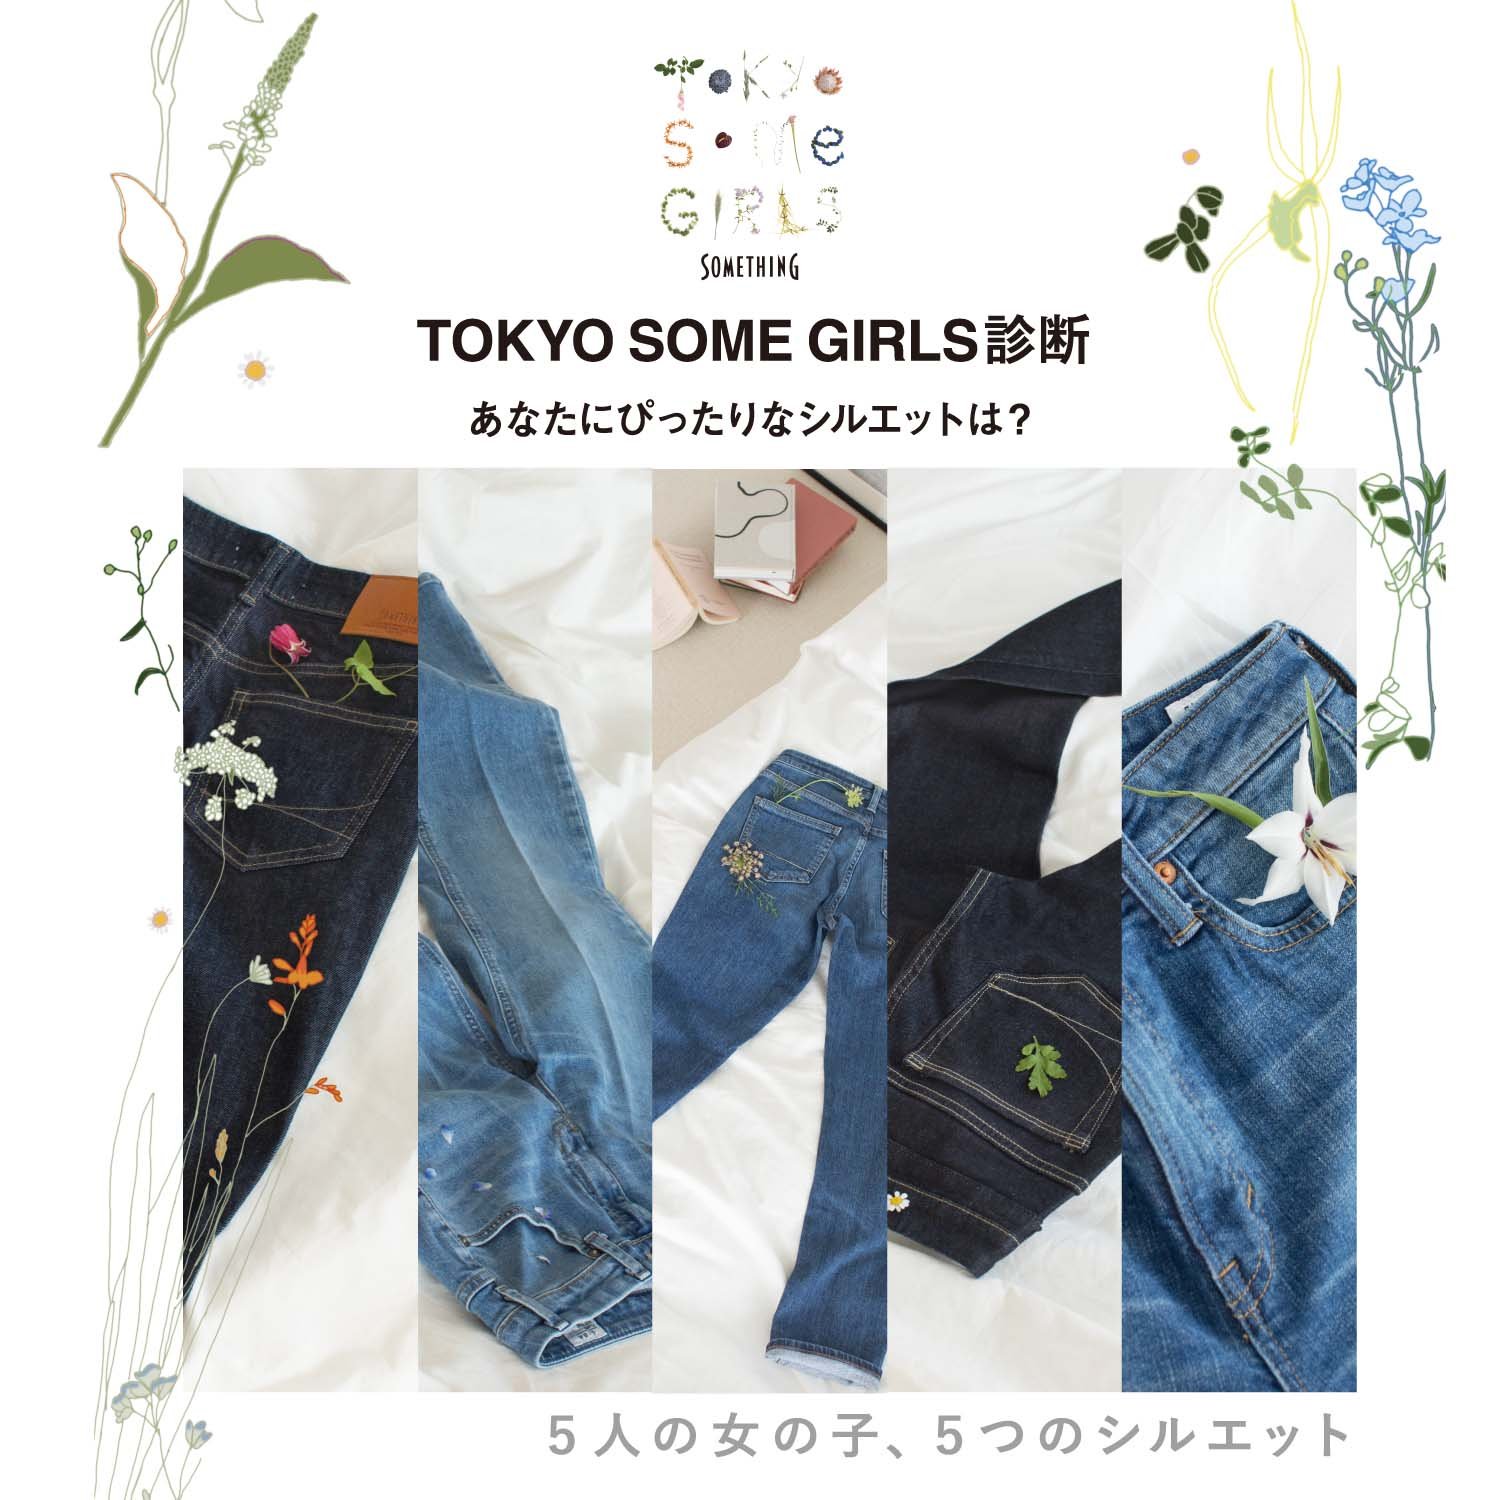 TOKYO SOME GIRLS 診断